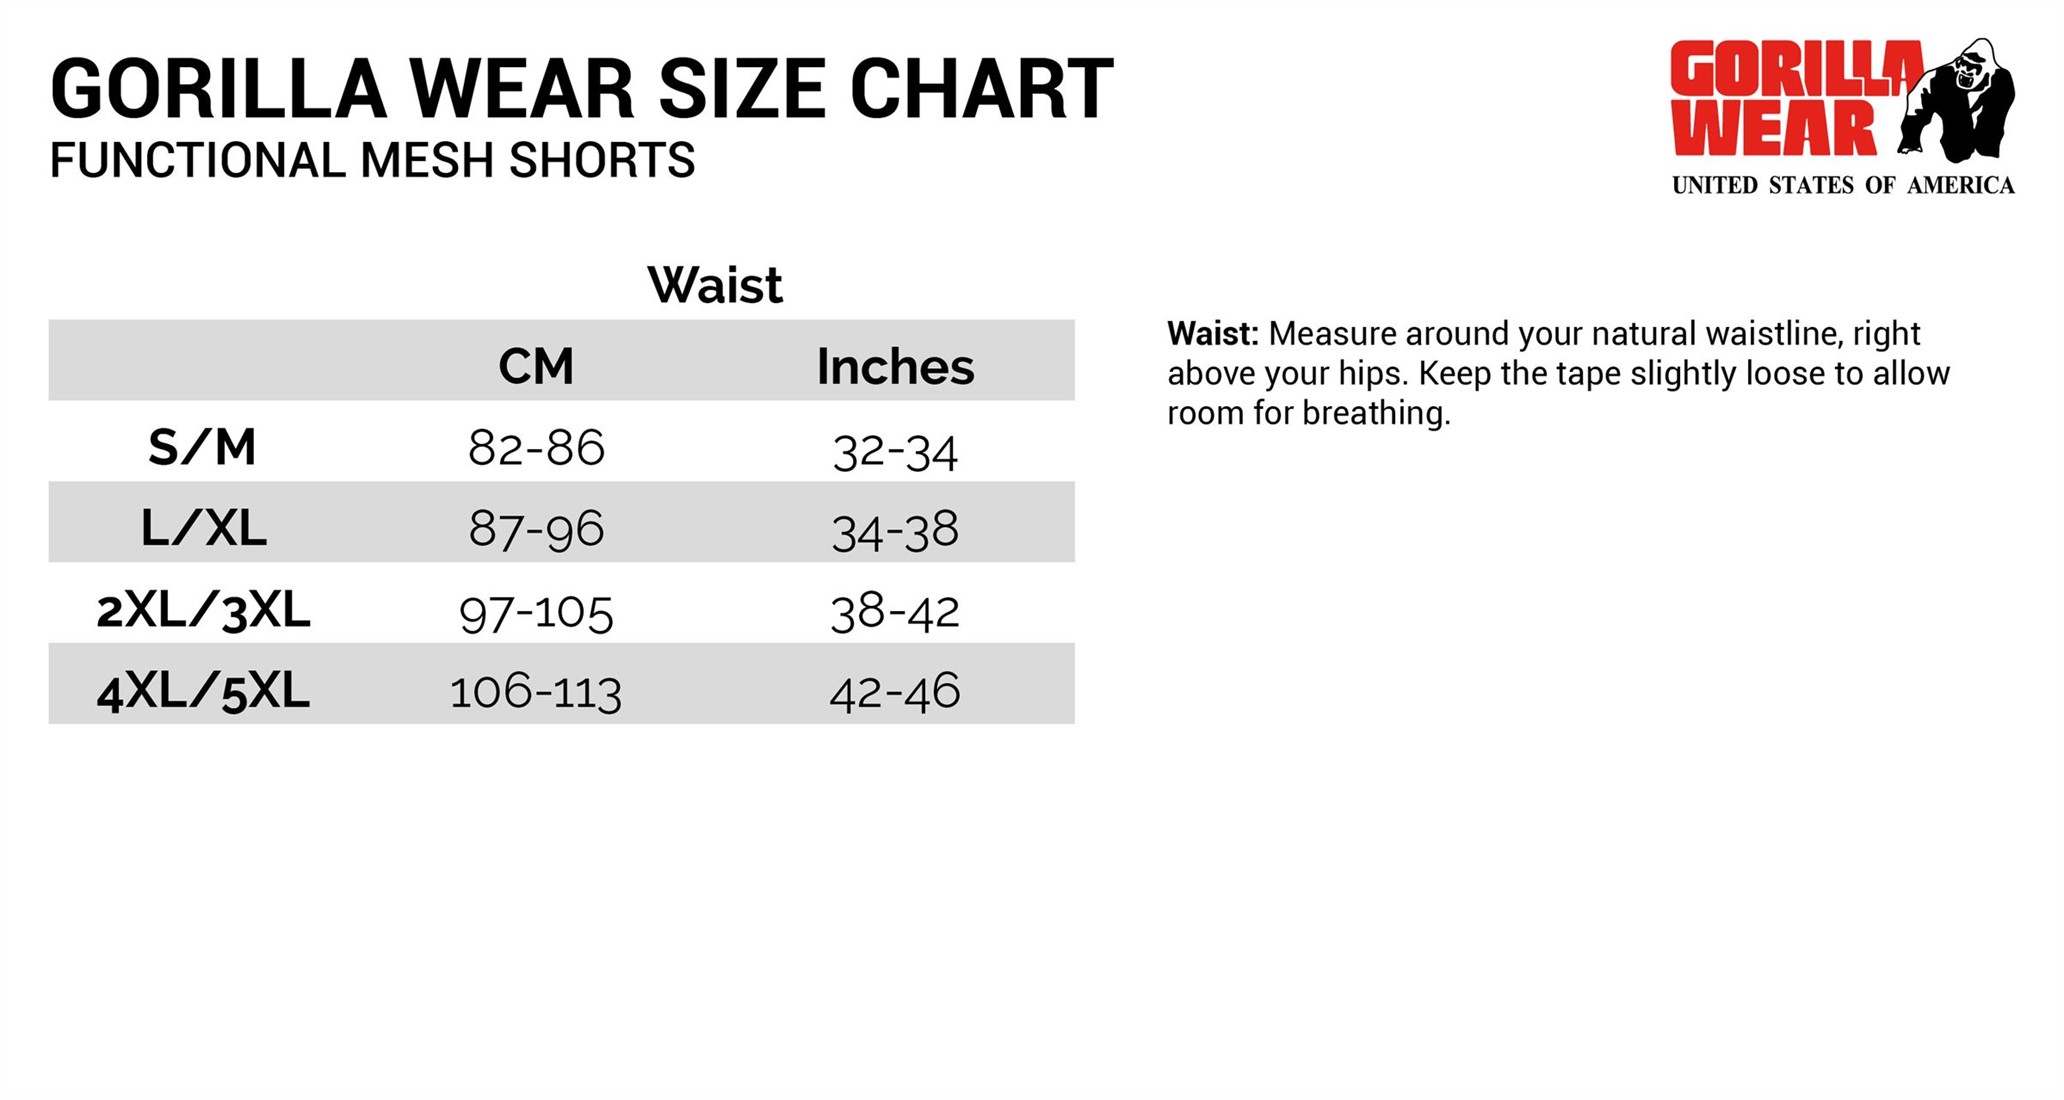 Gorilla Size Chart